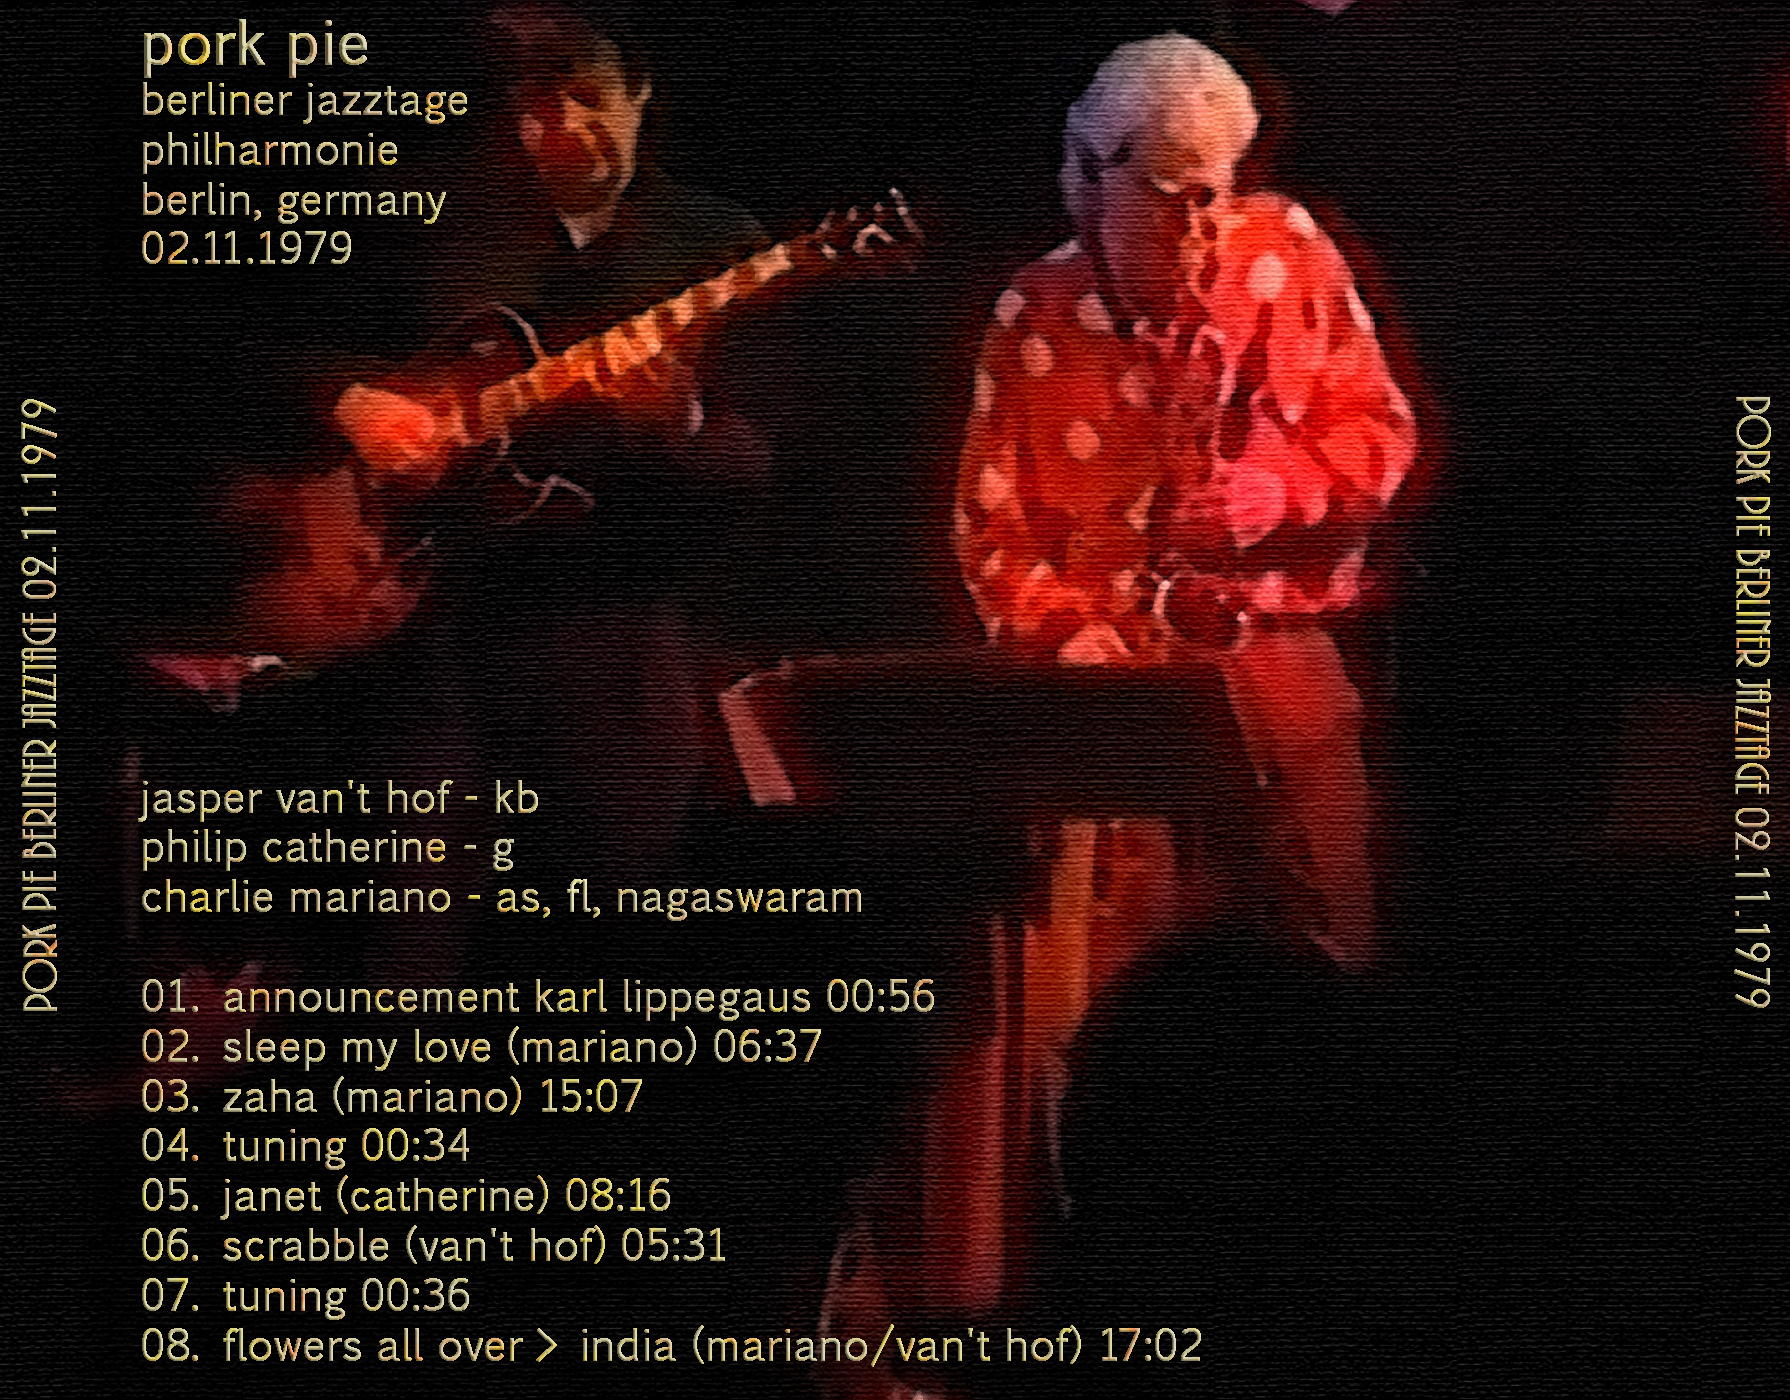 PorkPie1979-11-02PhilharmonieBerlinGermany (1).jpg